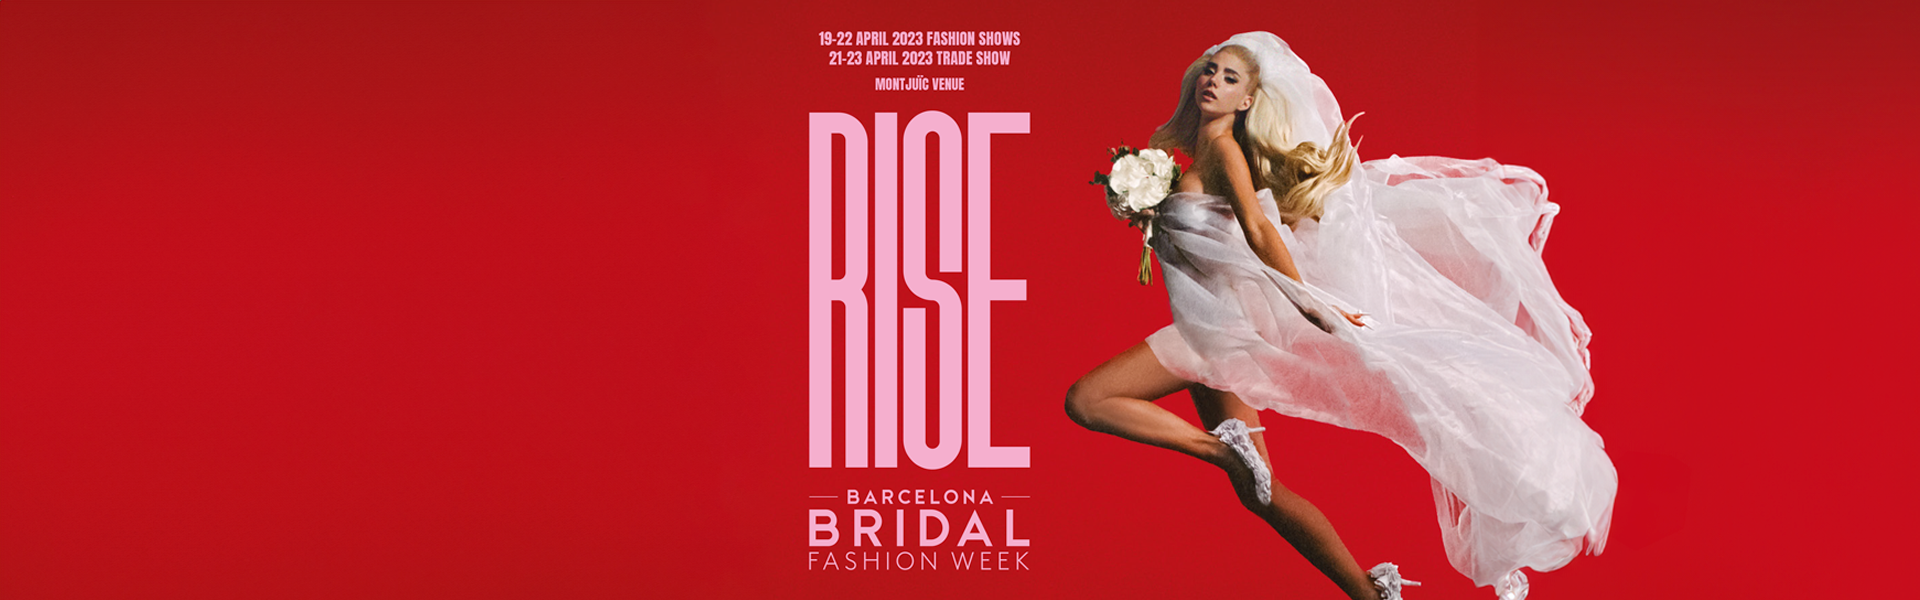 portada - barcelona bridal fashion week